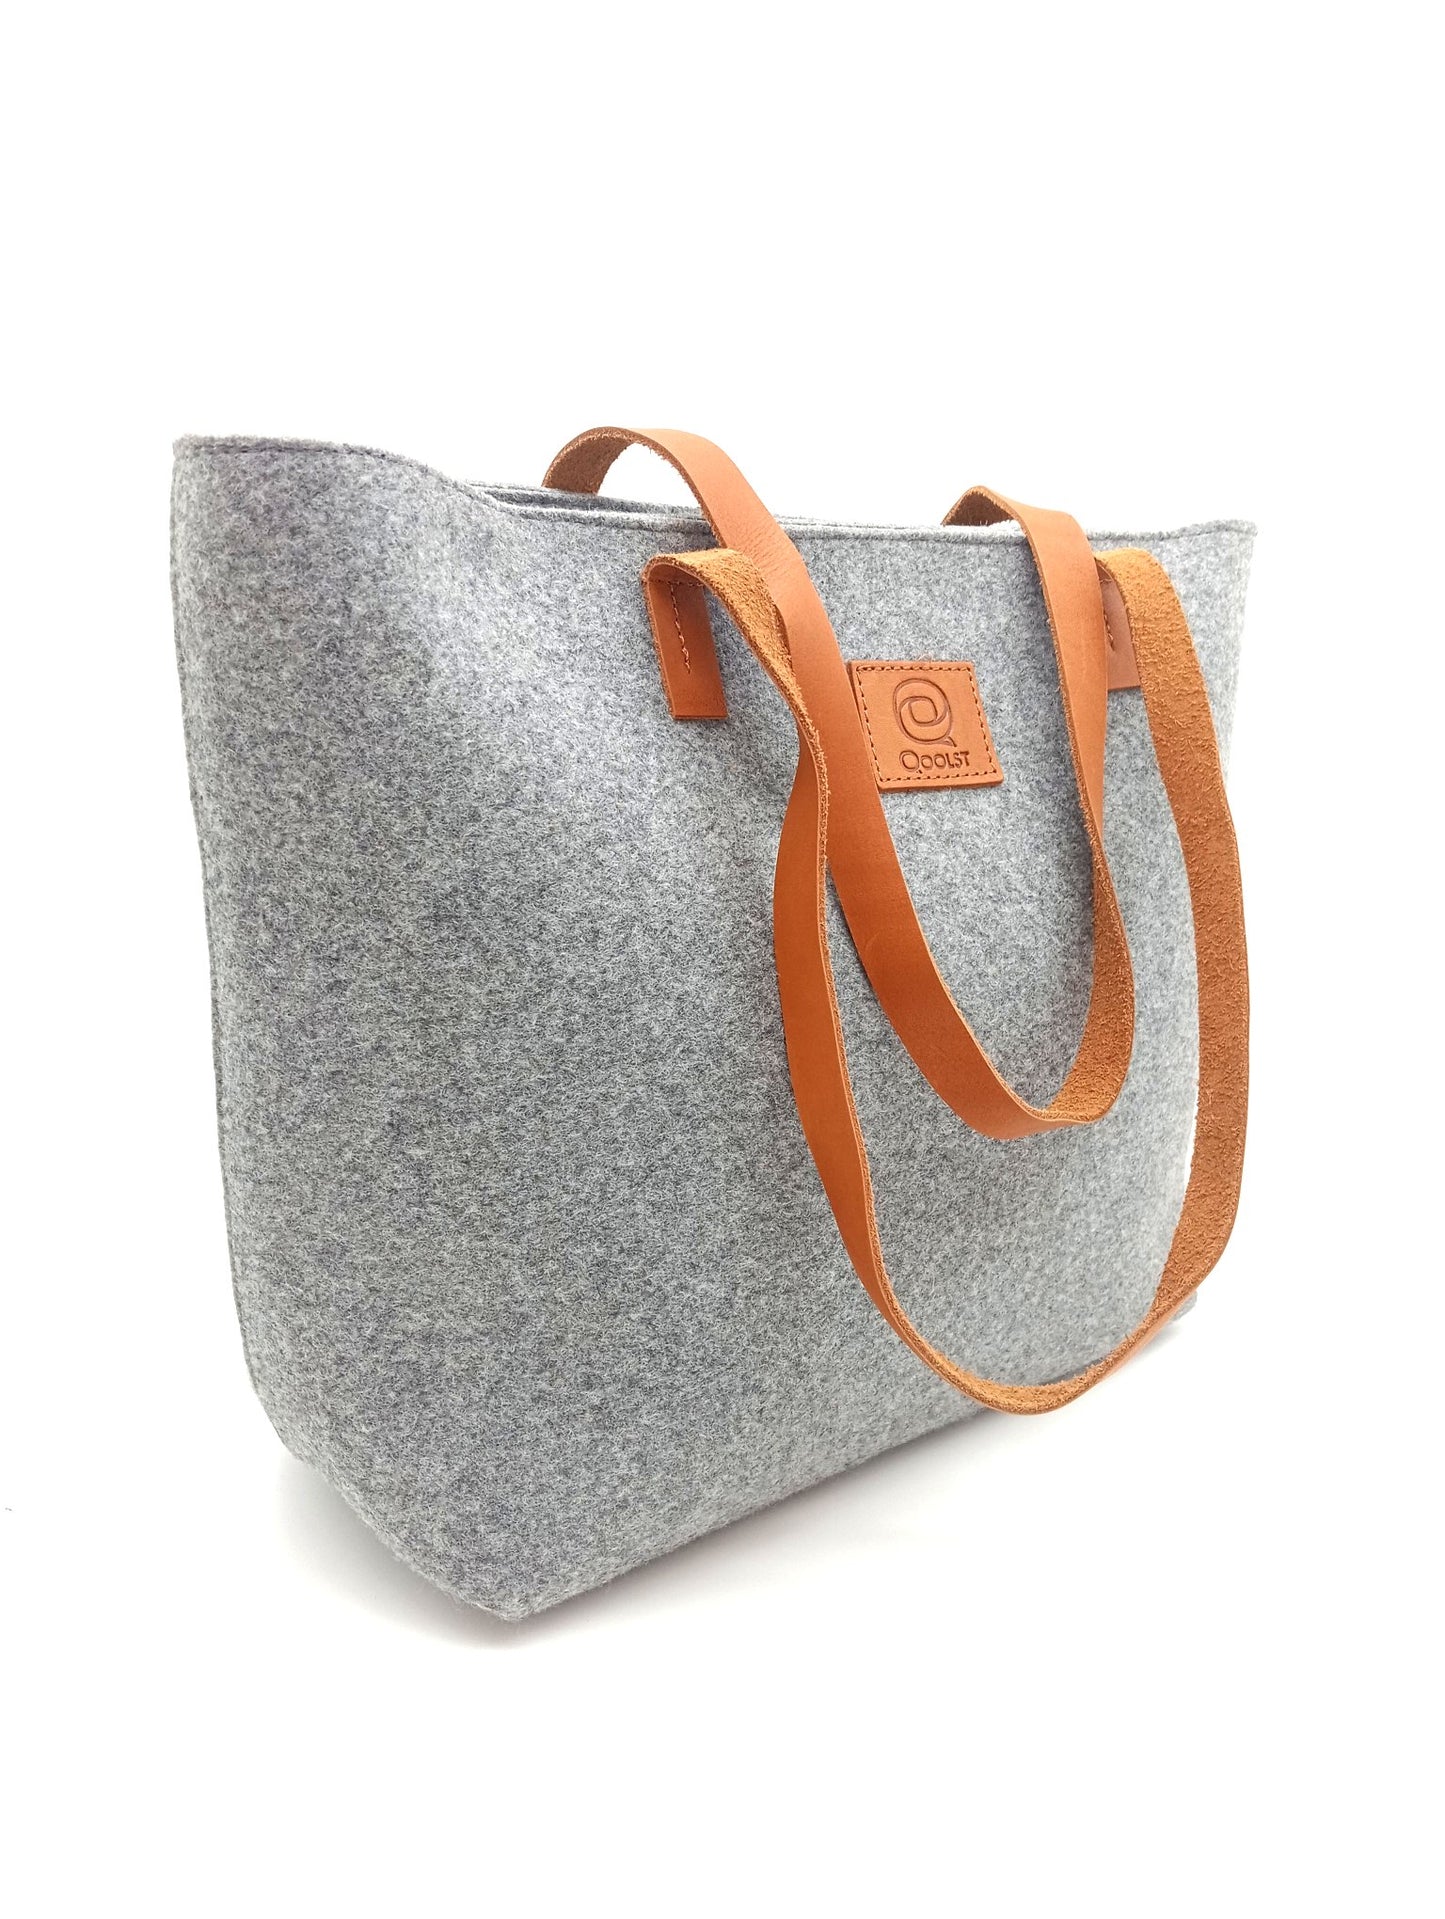 Qoolst Recycled Felt Women's Shoulder and Hand Shopper Bag 